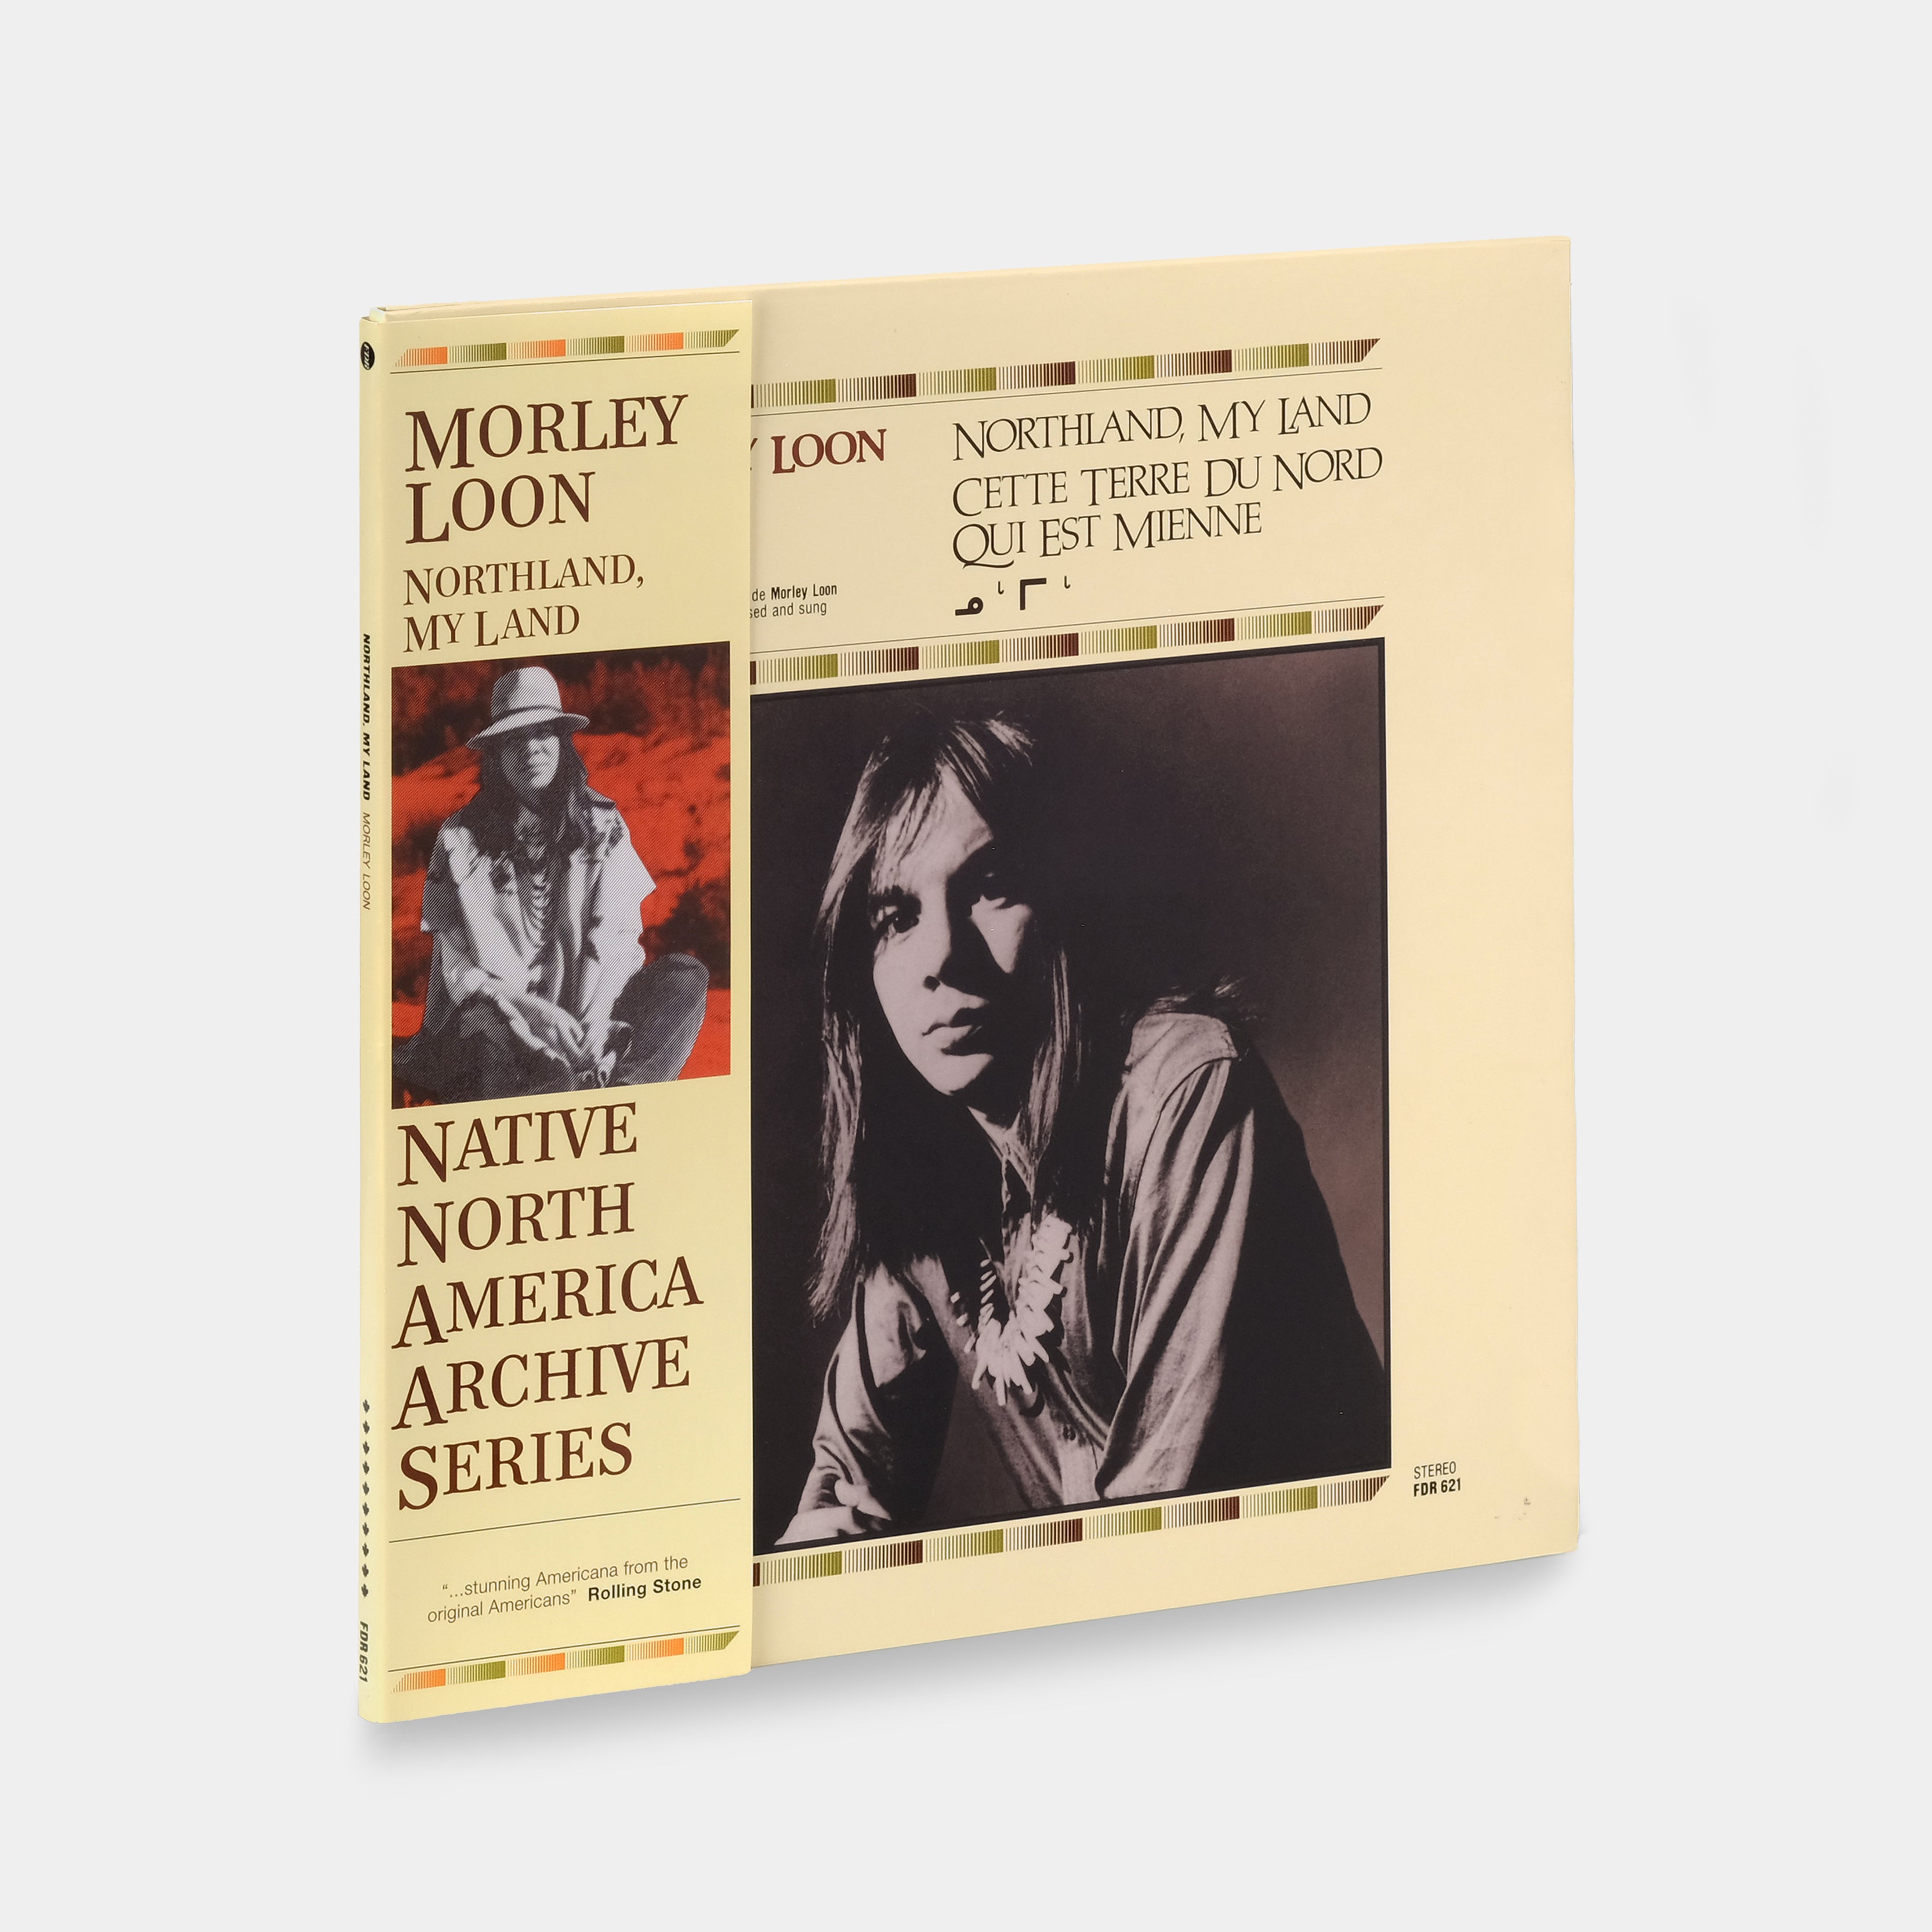 Morley Loon - Northland, My Land LP Vinyl Record